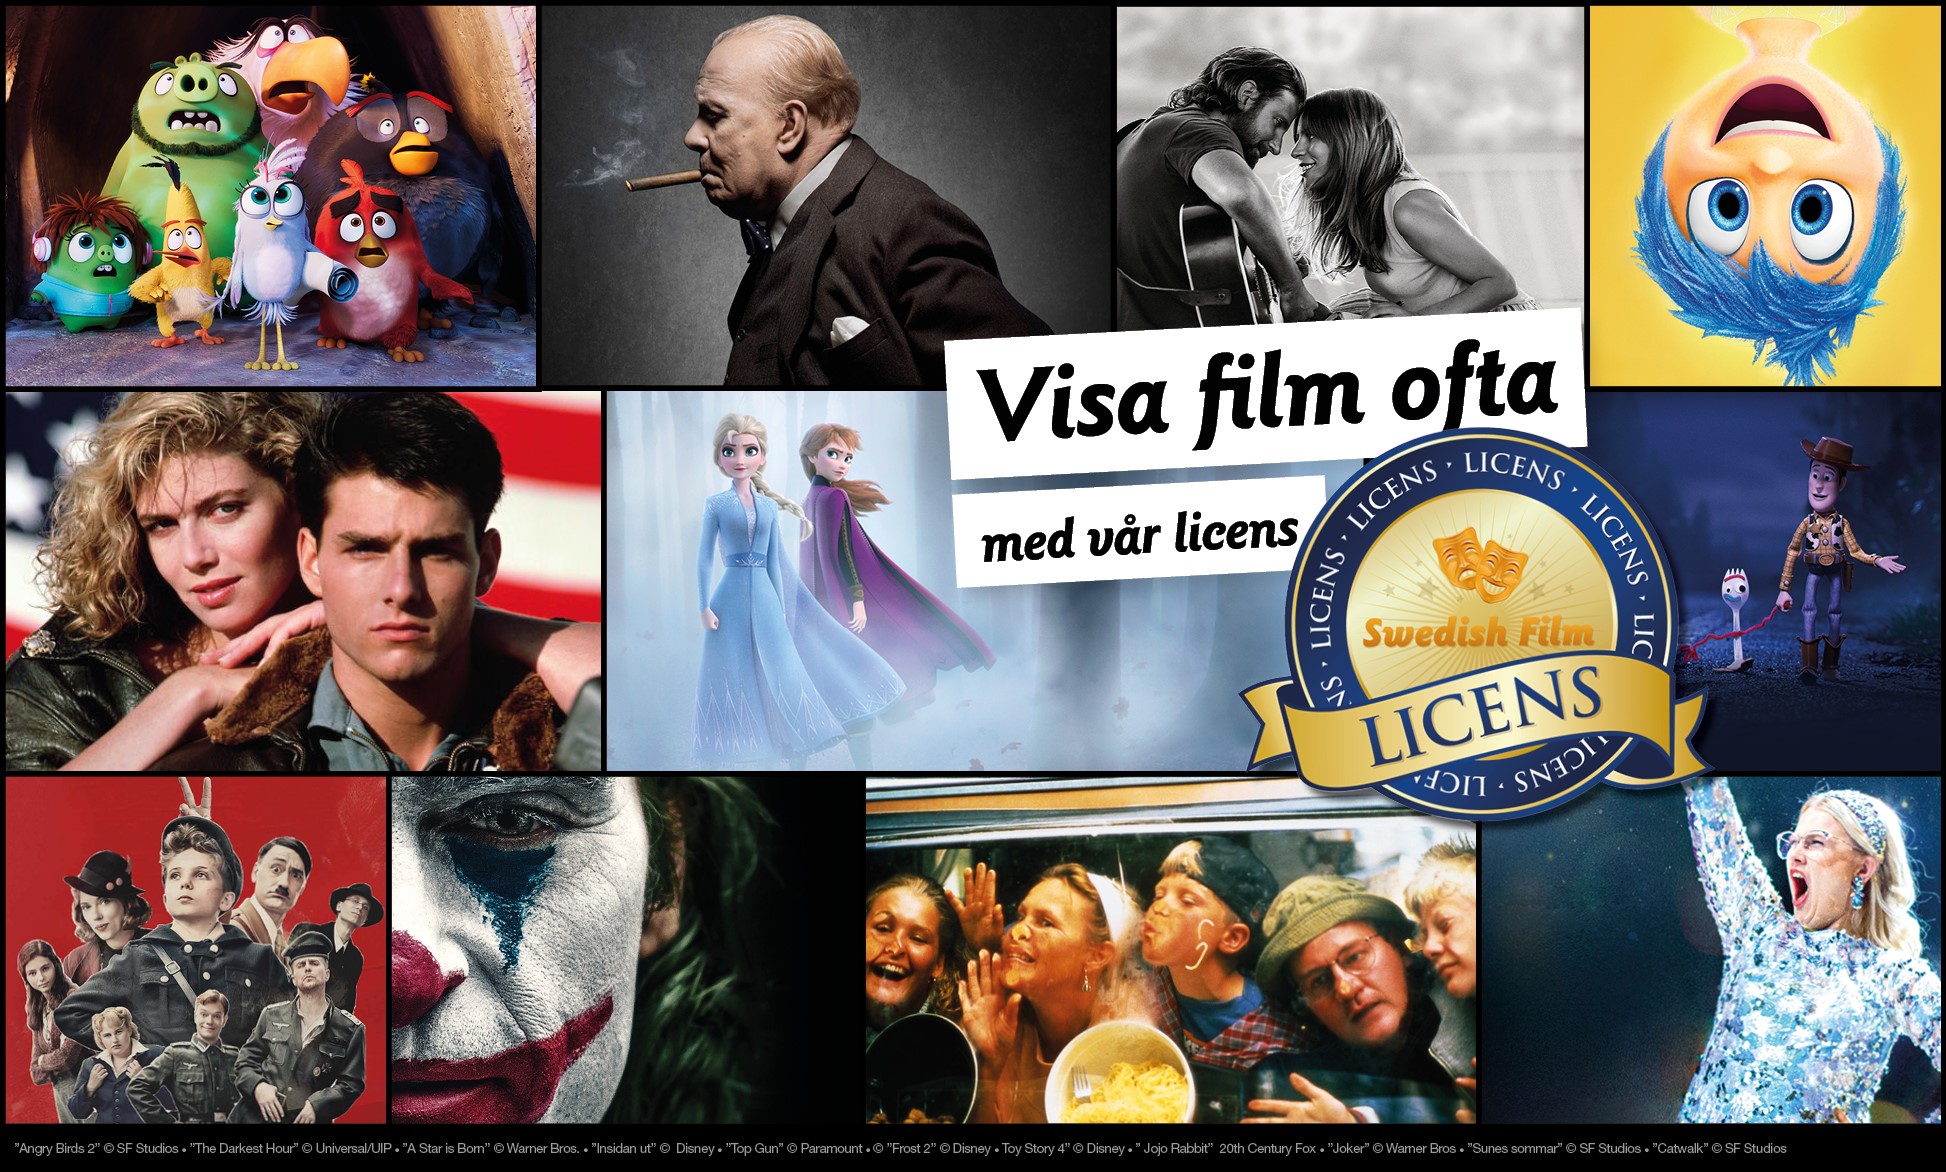 Swedish Film Licens